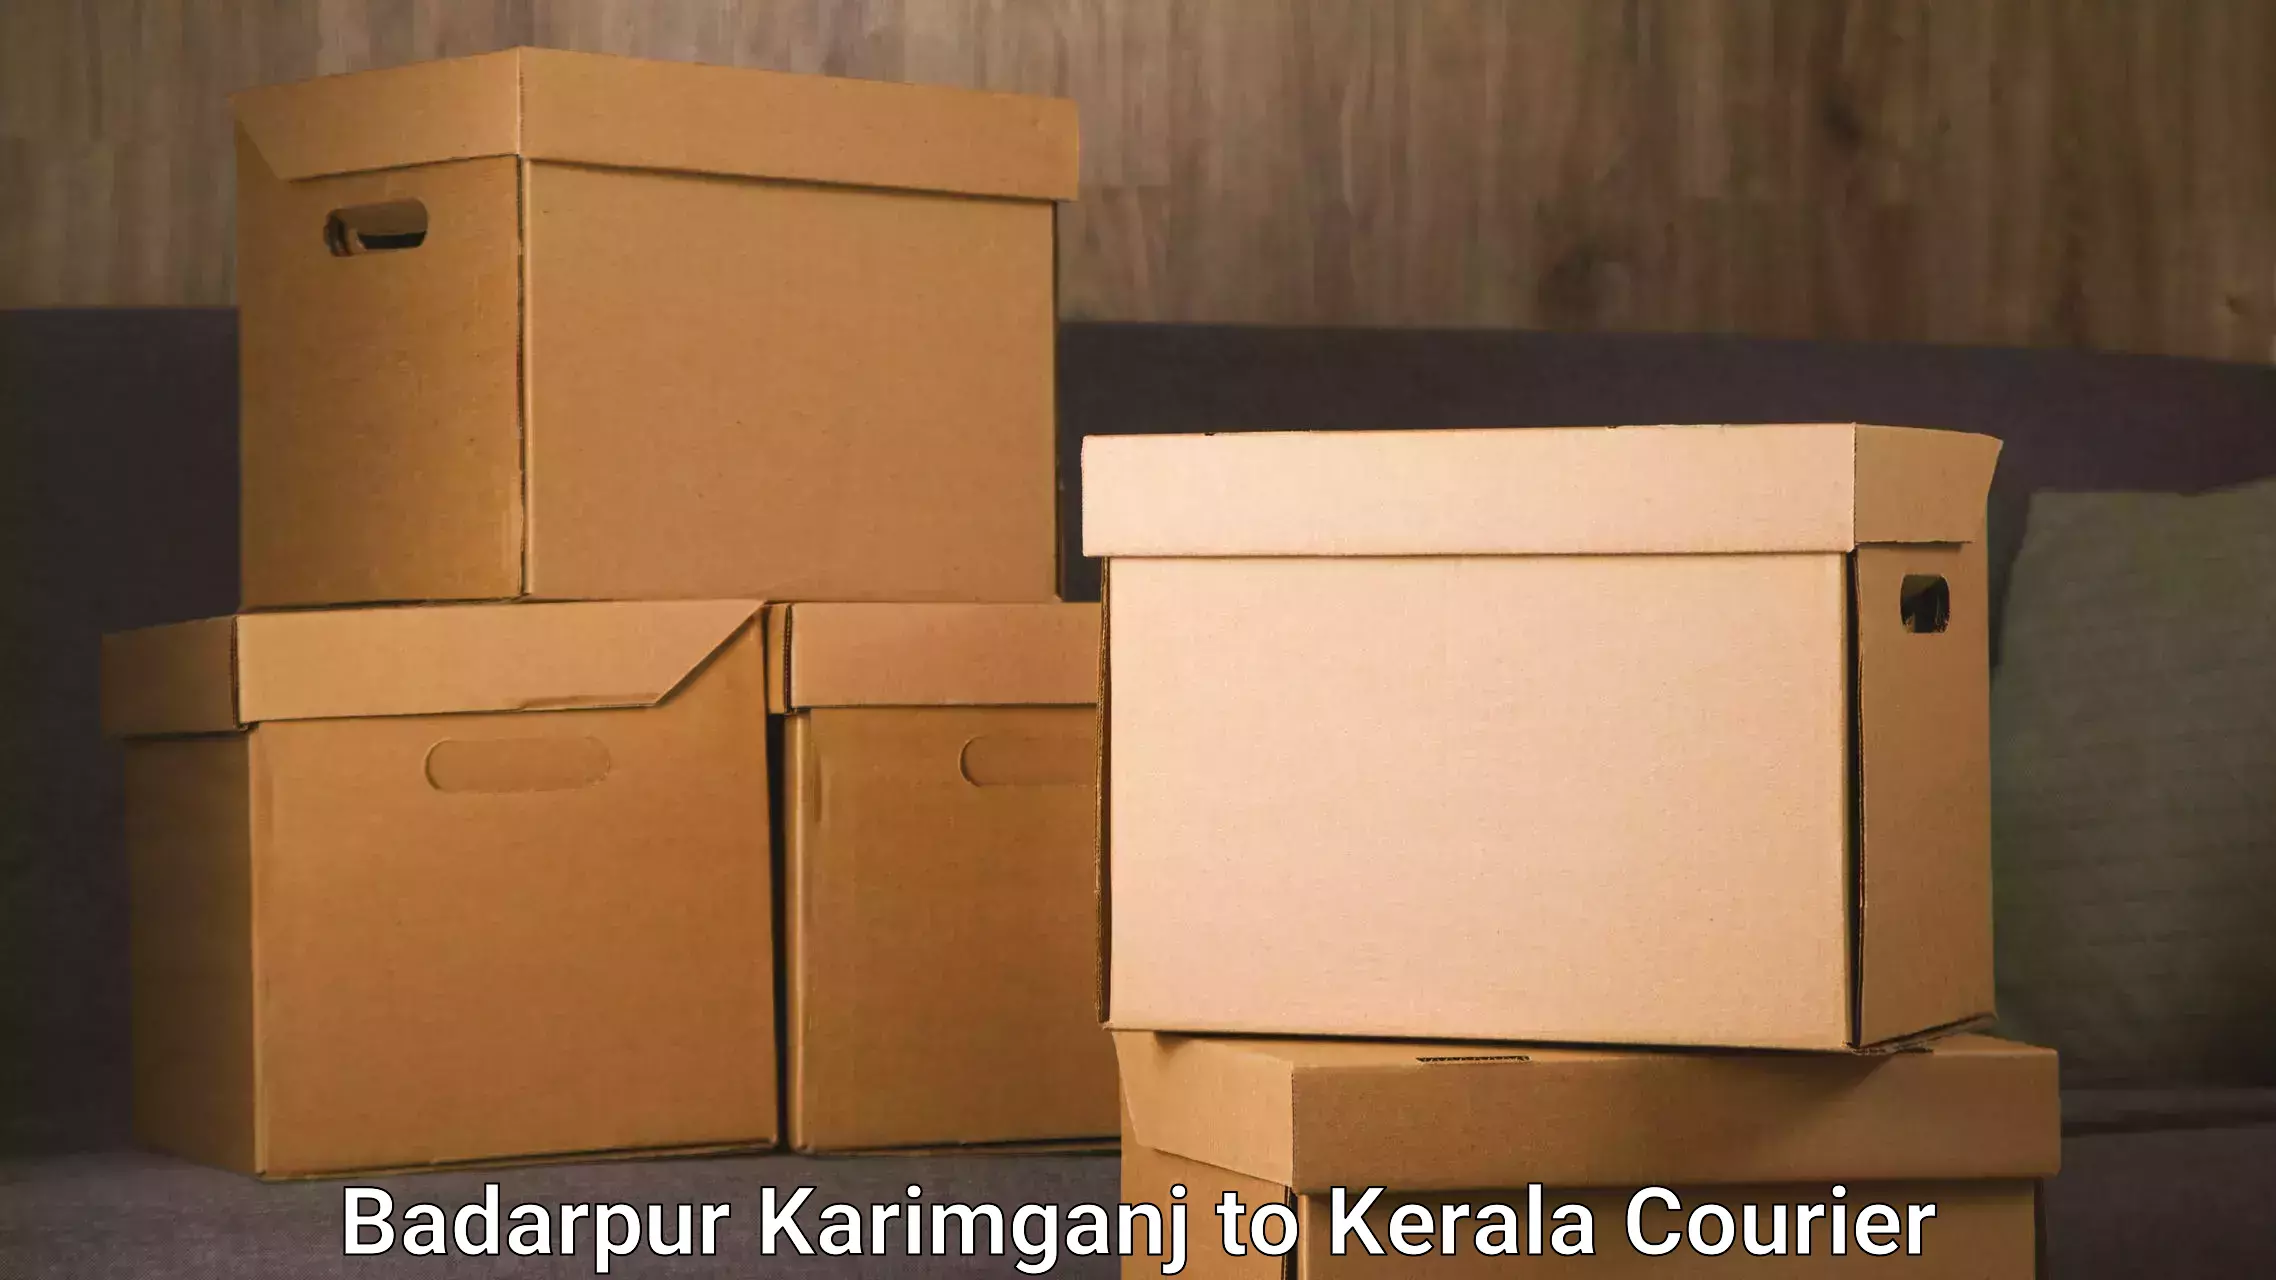 Package delivery network Badarpur Karimganj to Ponekkara